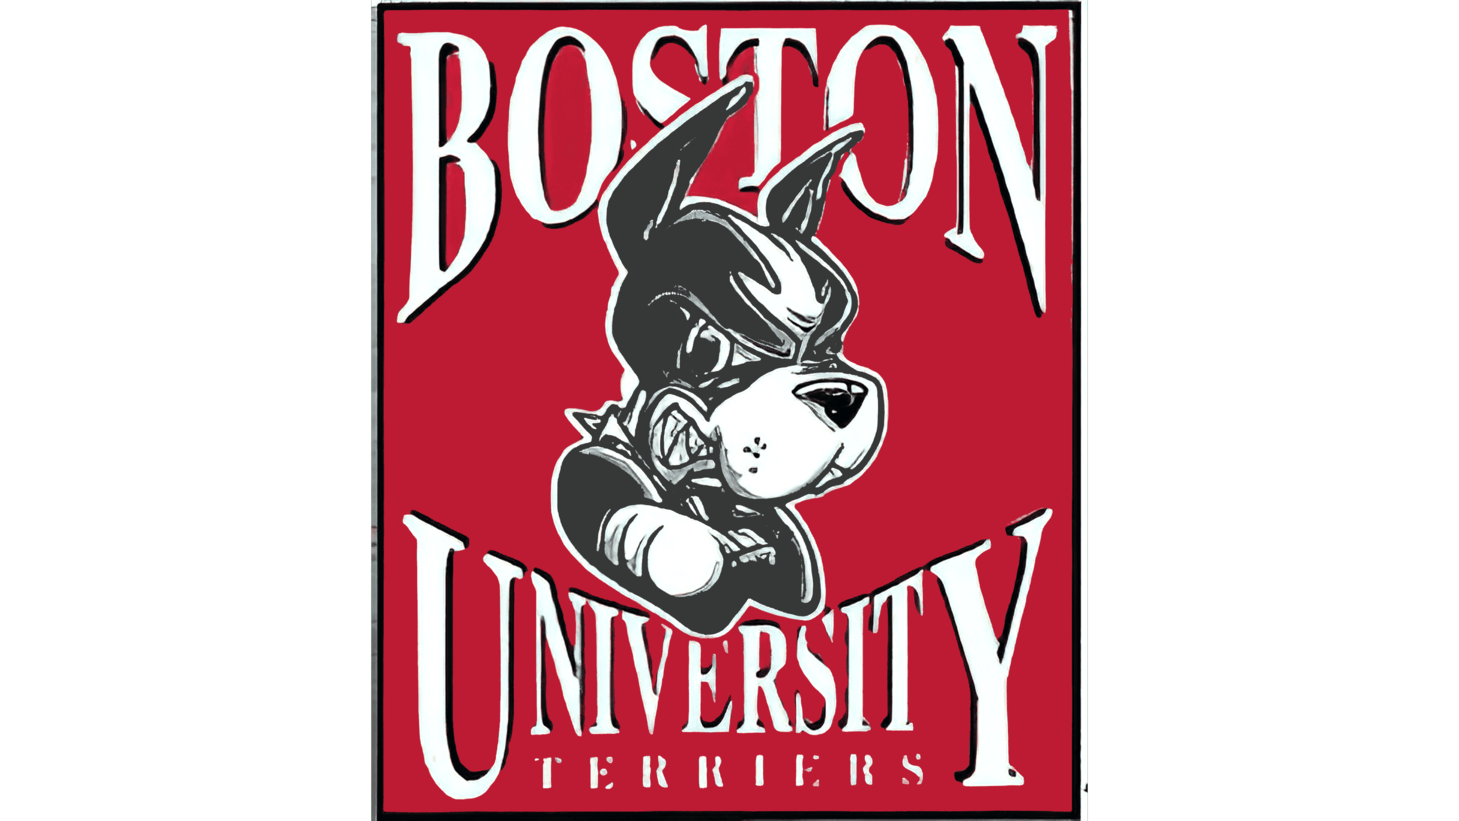 Boston university terriers sign 1999